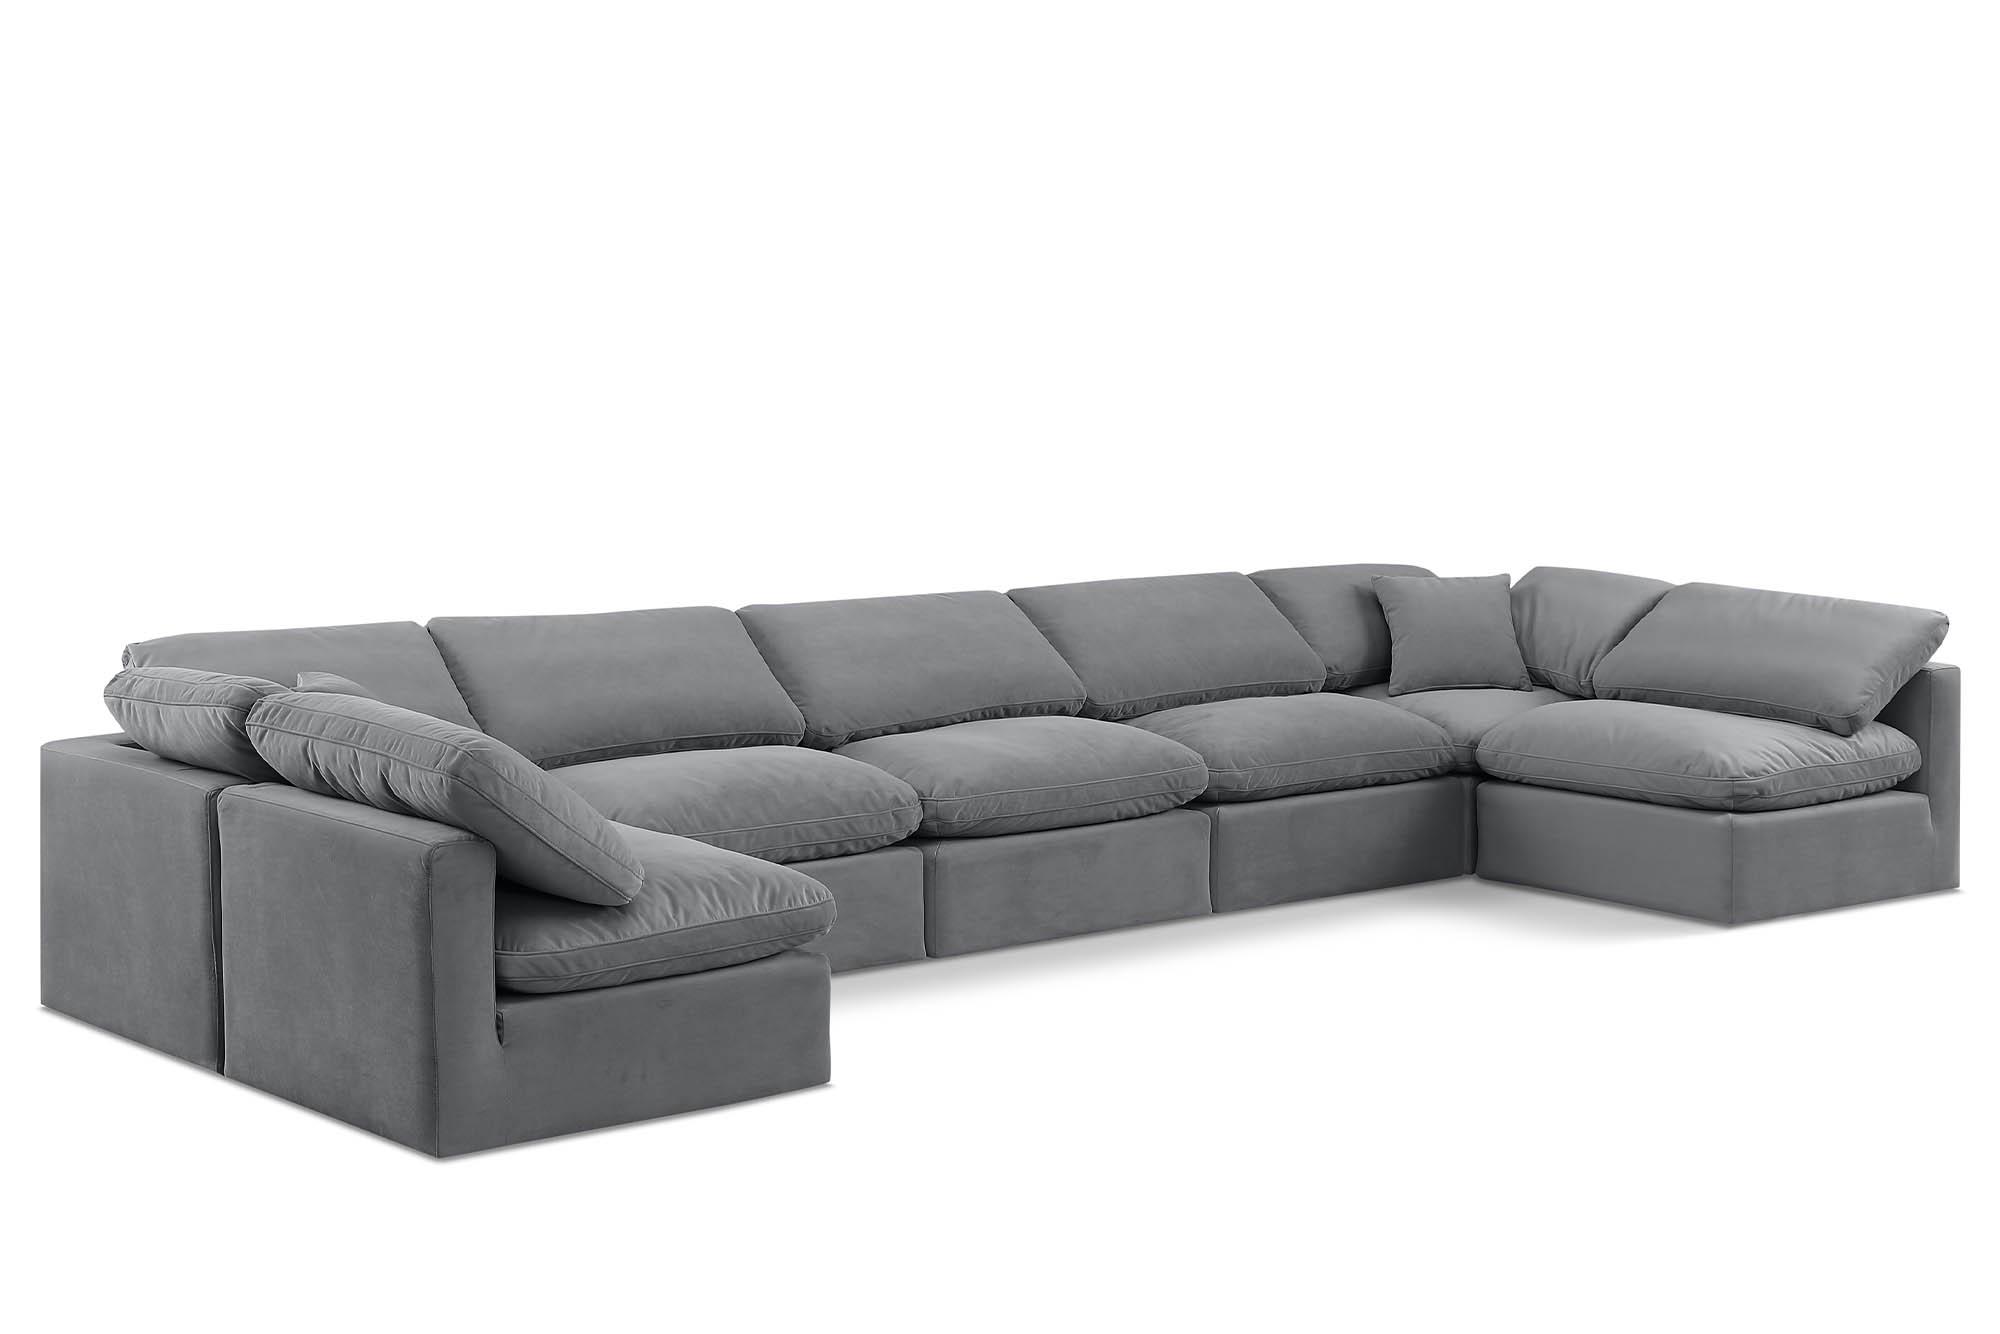 Contemporary, Modern Modular Sectional Sofa INDULGE 147Grey-Sec7B 147Grey-Sec7B in Gray Velvet